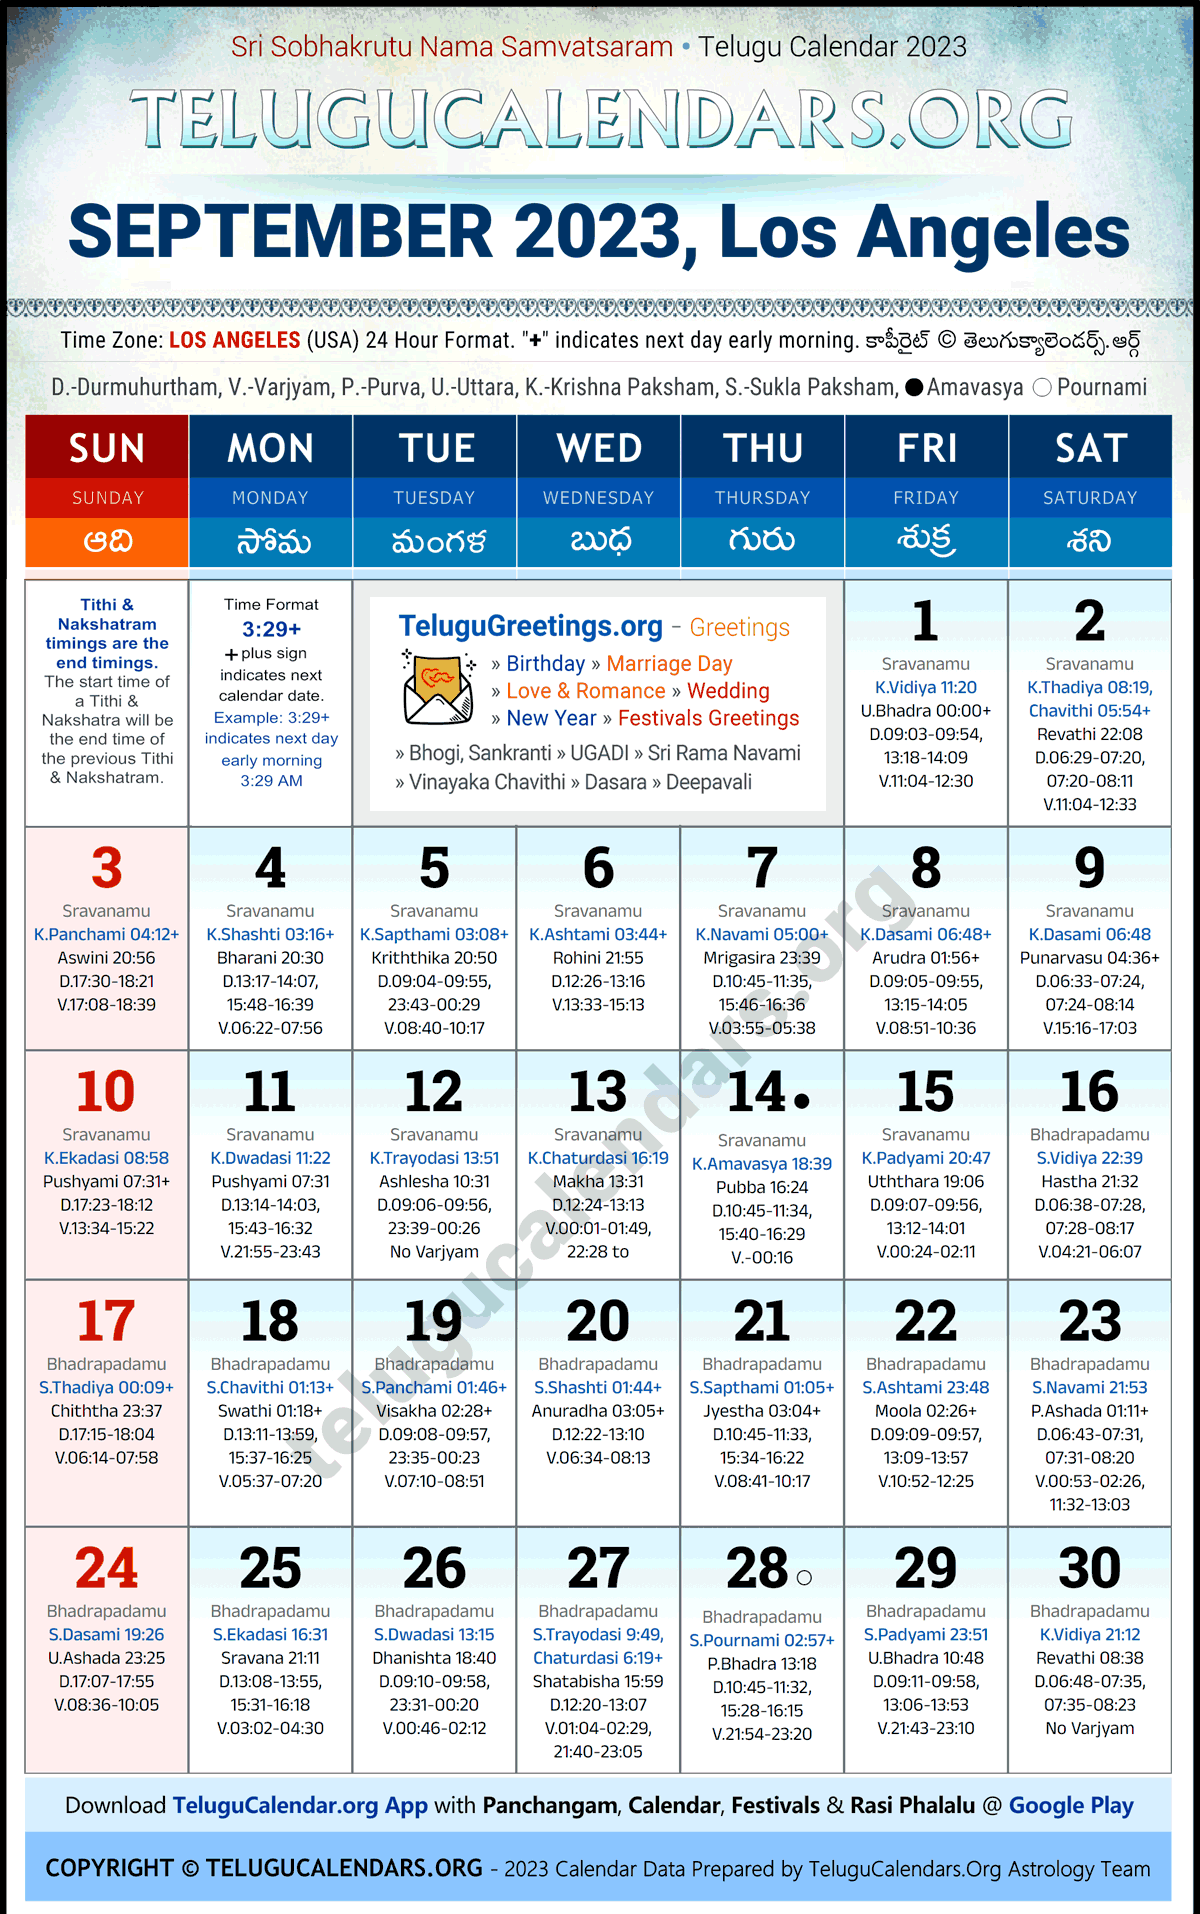 Telugu Calendar 2023 September Festivals for Los Angeles